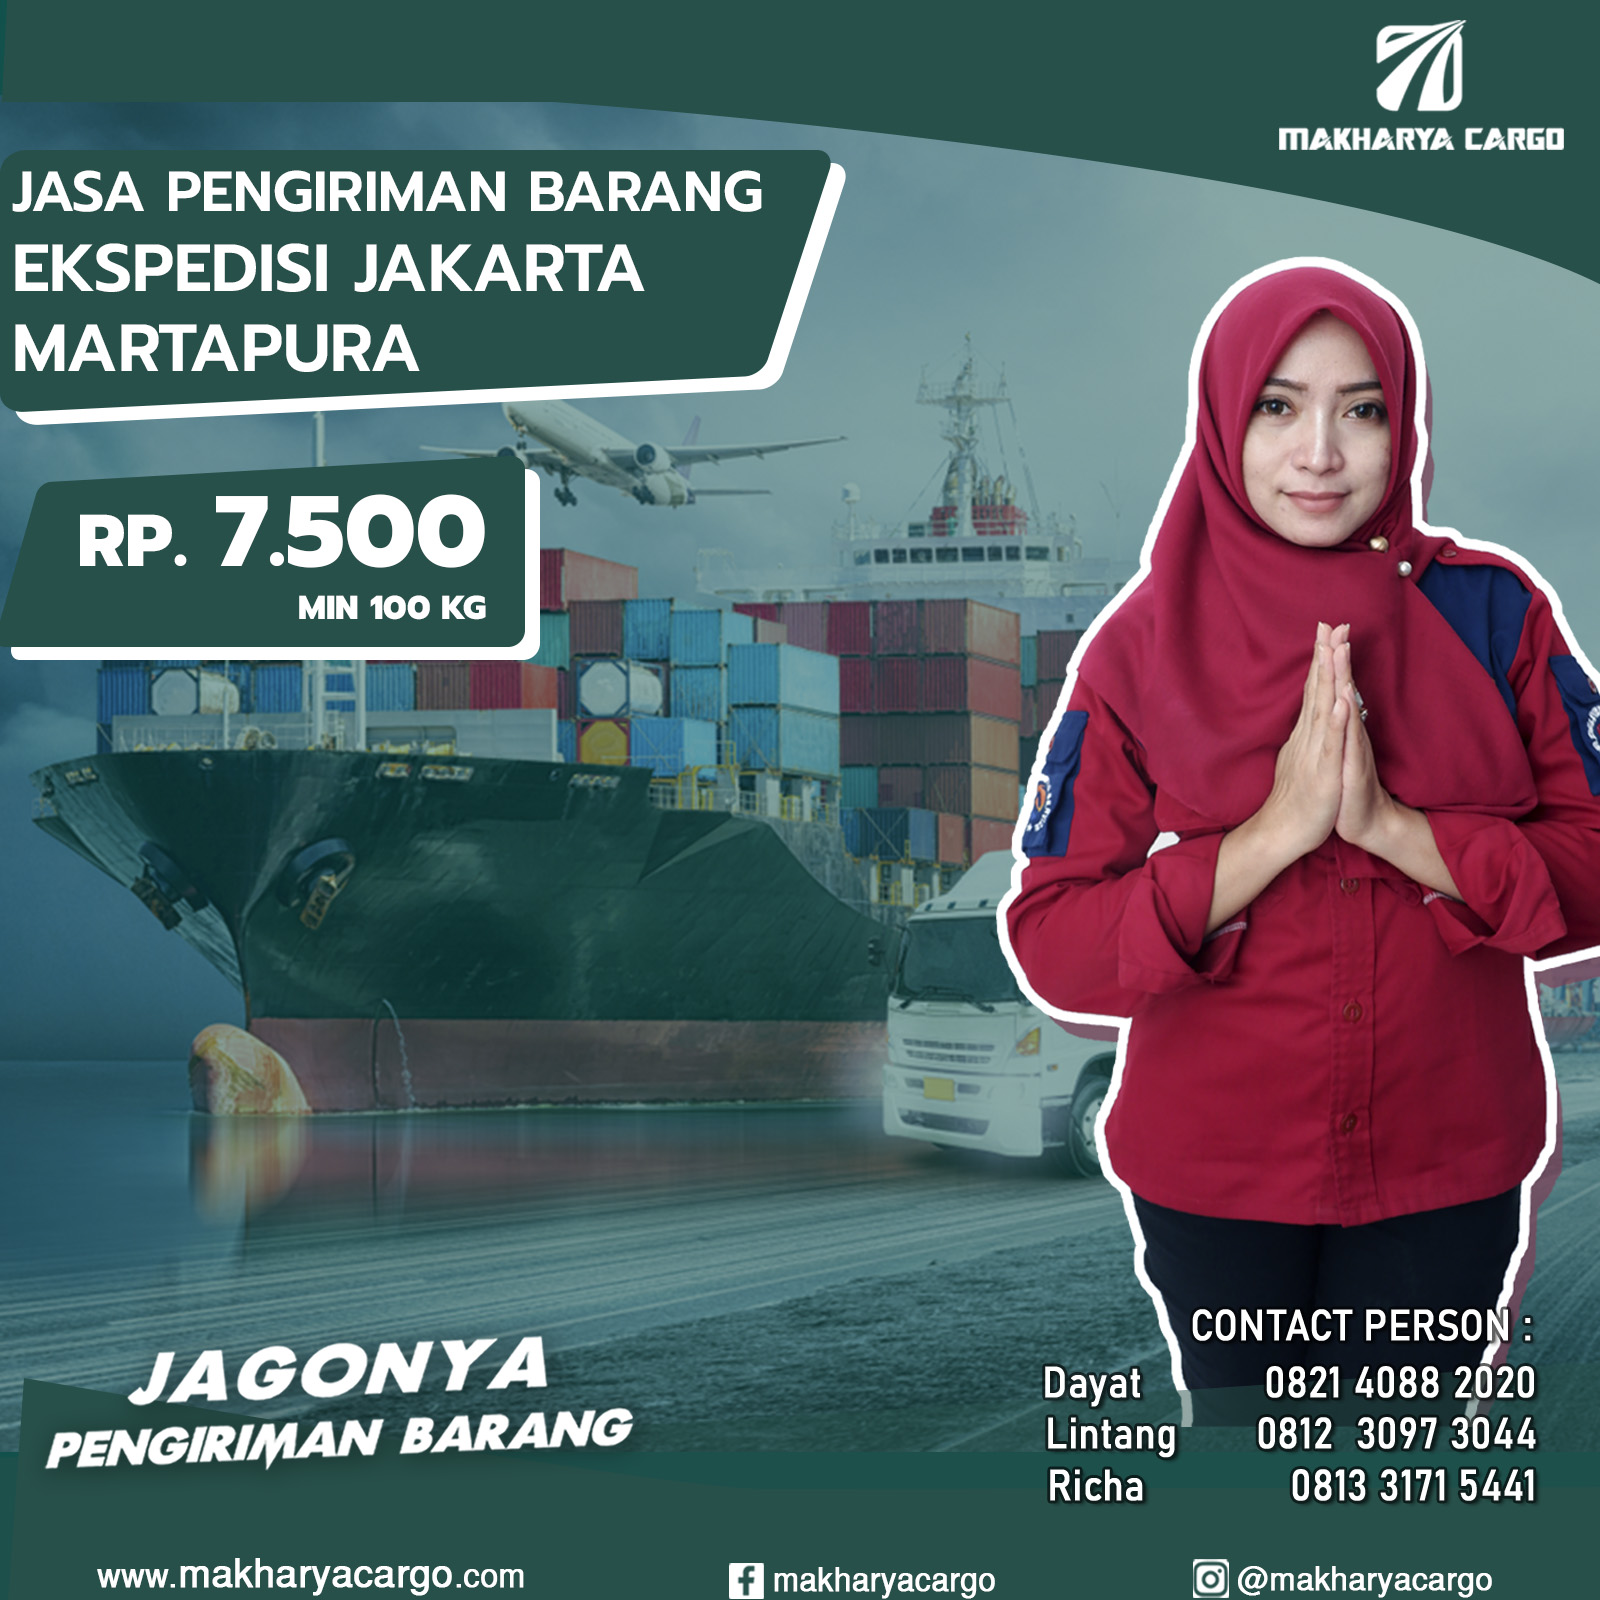 Ekspedisi Jakarta Martapura